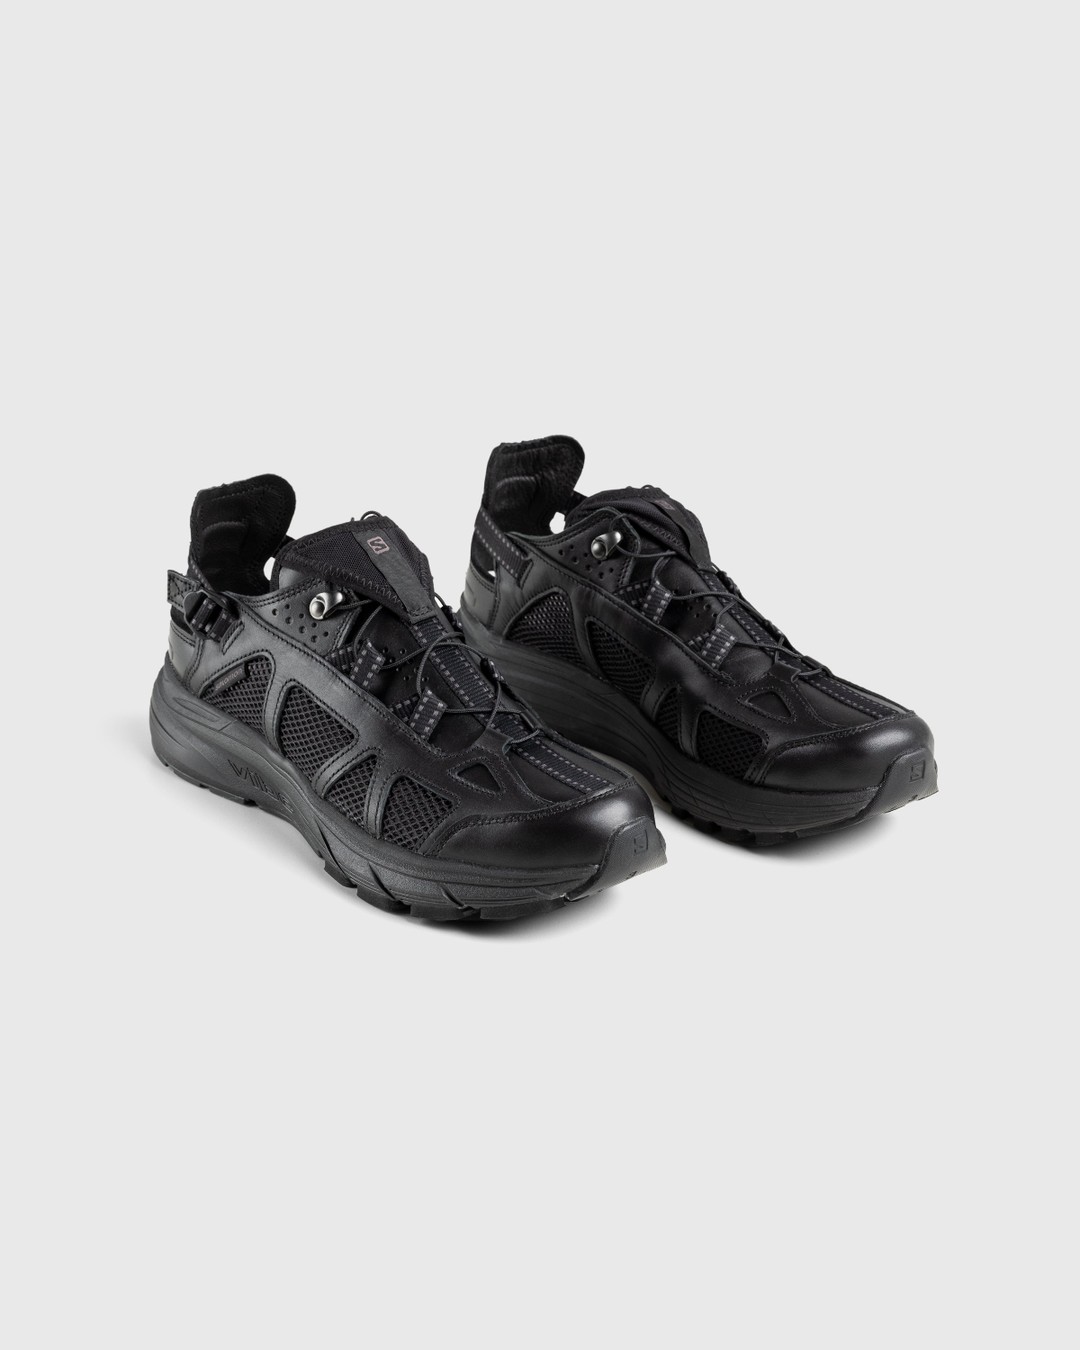 Salomon – Techsonic Leather Advanced Black/Black/Magnet - Low Top Sneakers - Black - Image 4